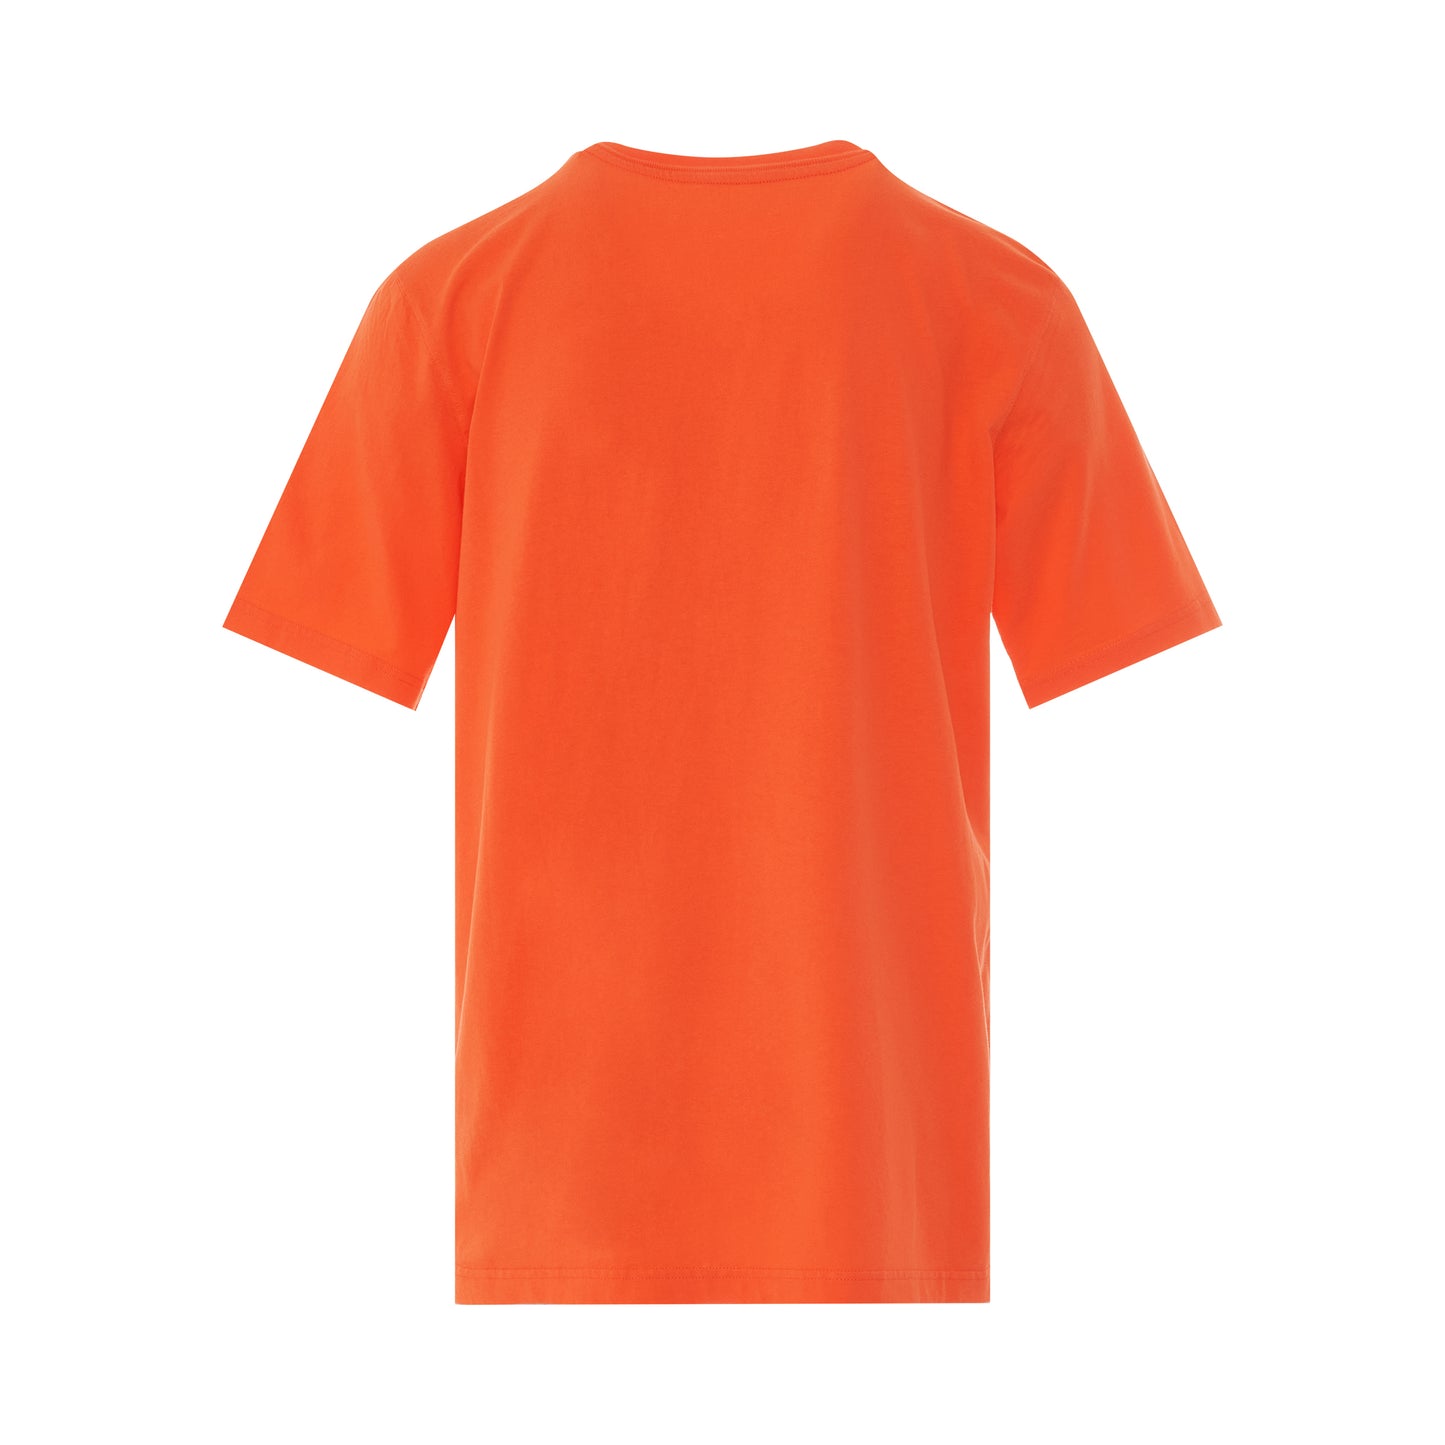 Heron BW Oversized T-Shirt in Orange